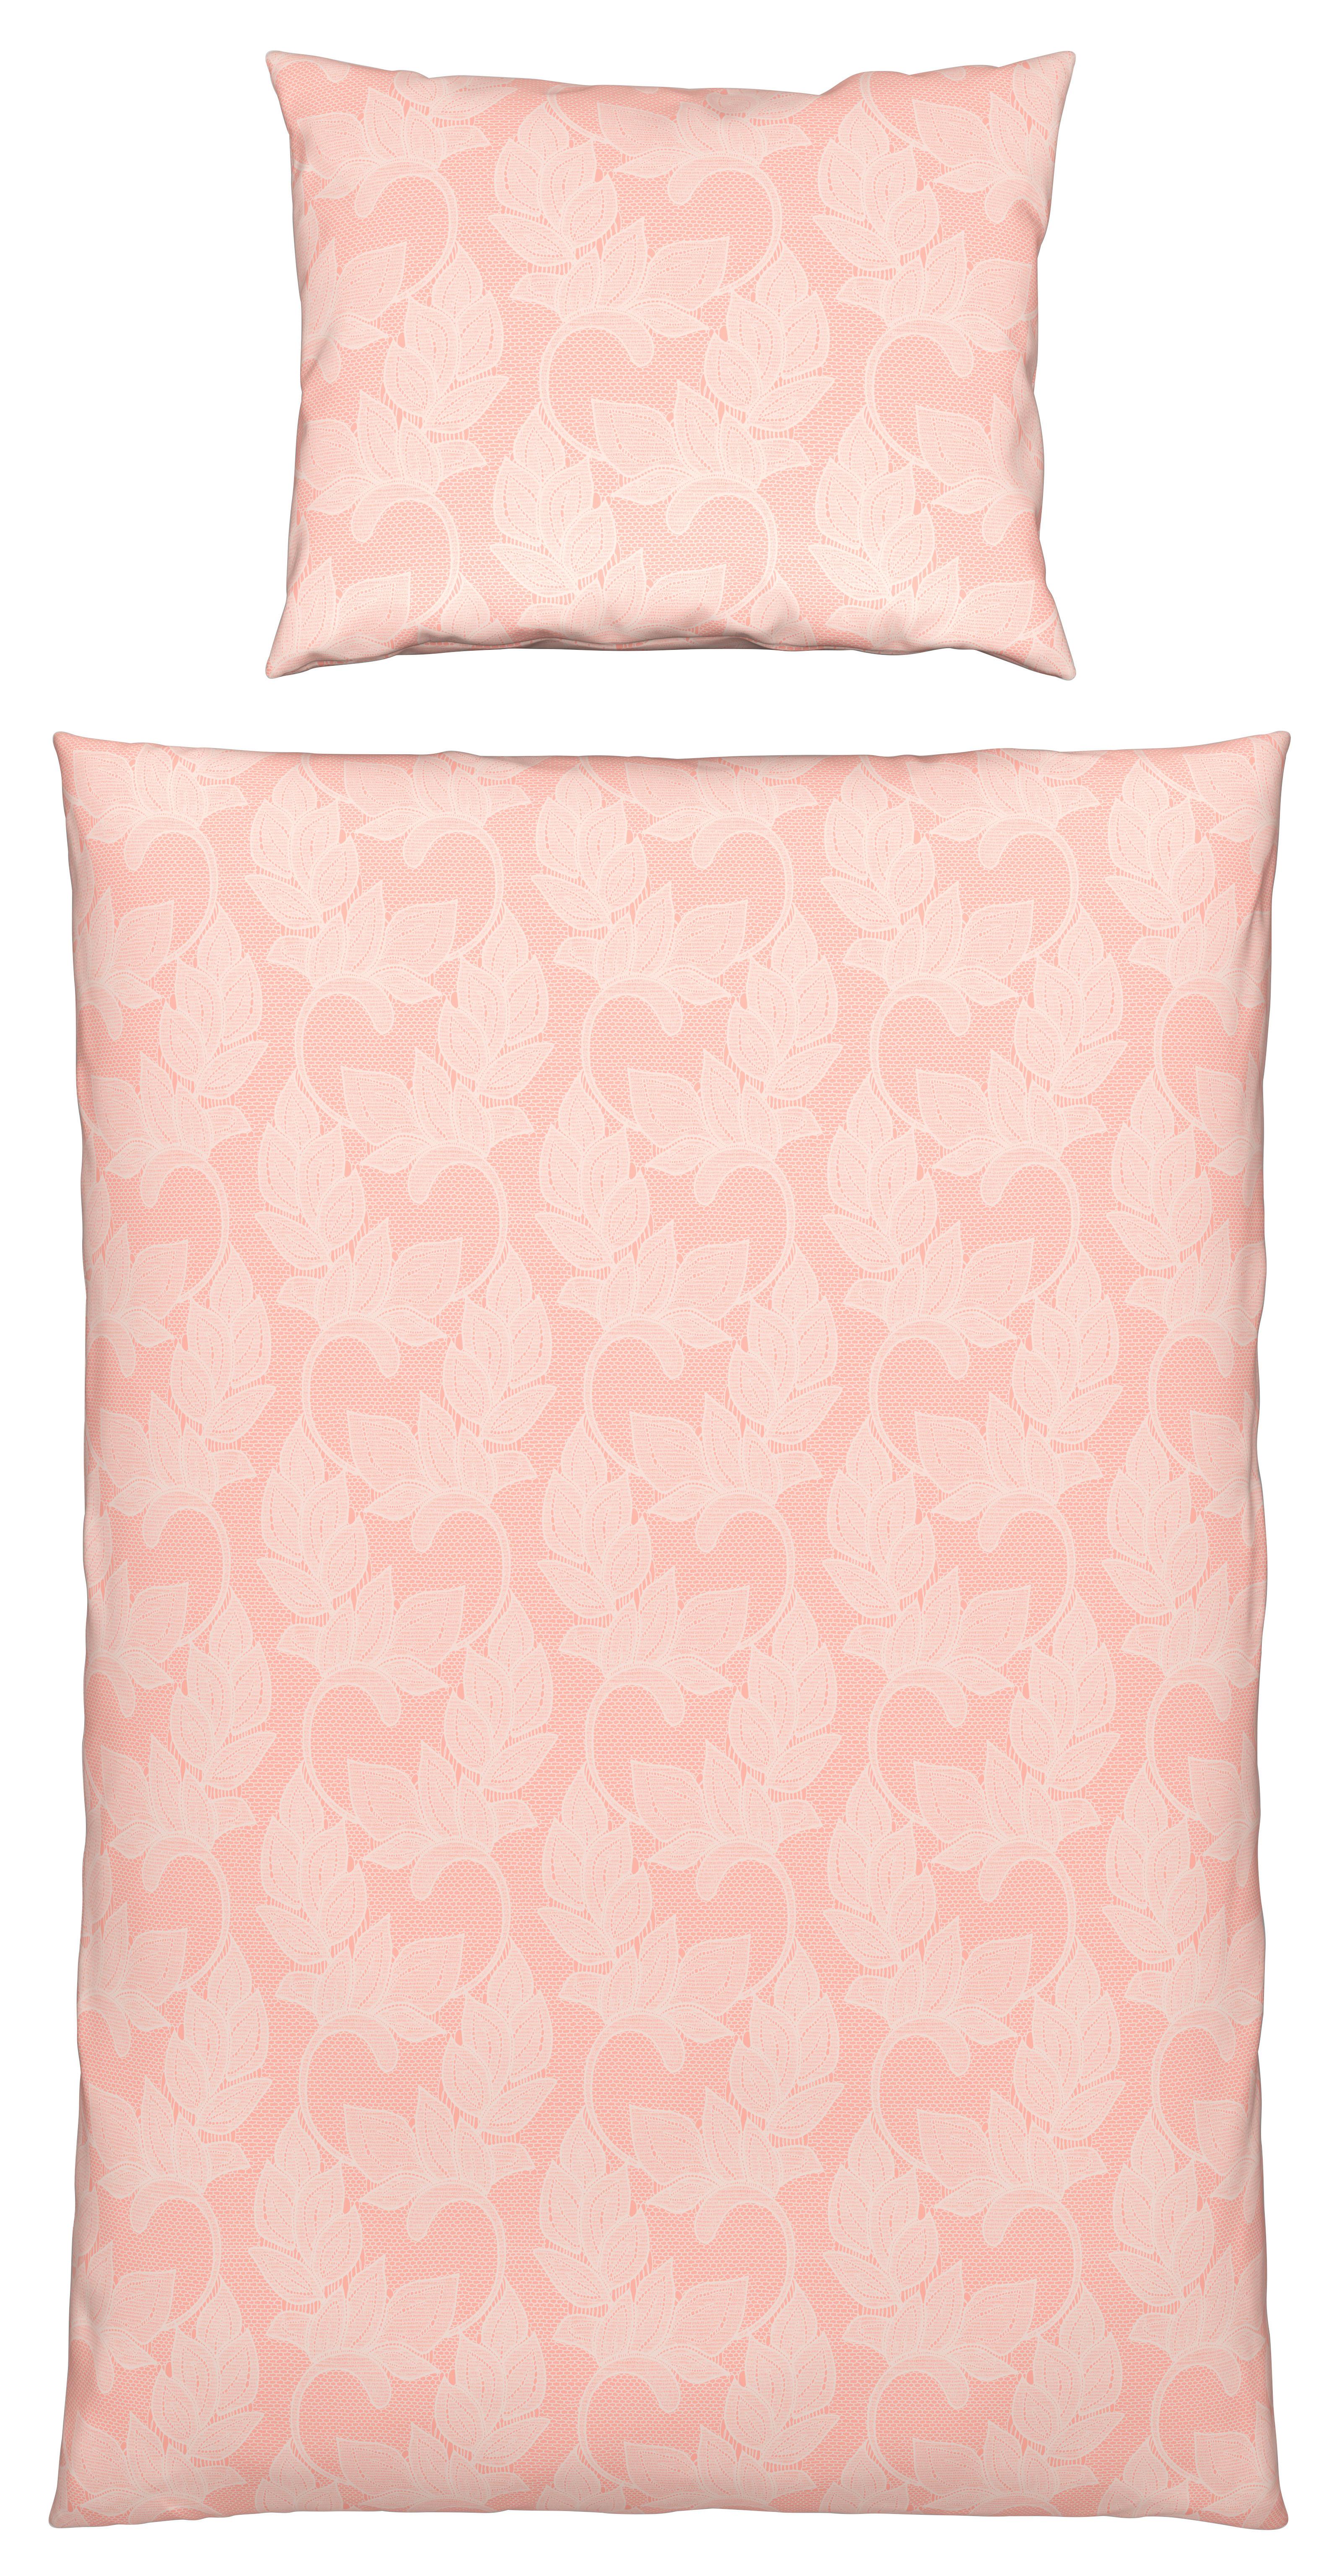 Bettwäsche Emelie in Rosa ca. 160x210 - Rosa, Konventionell, Textil (140/200cm) - Premium Living